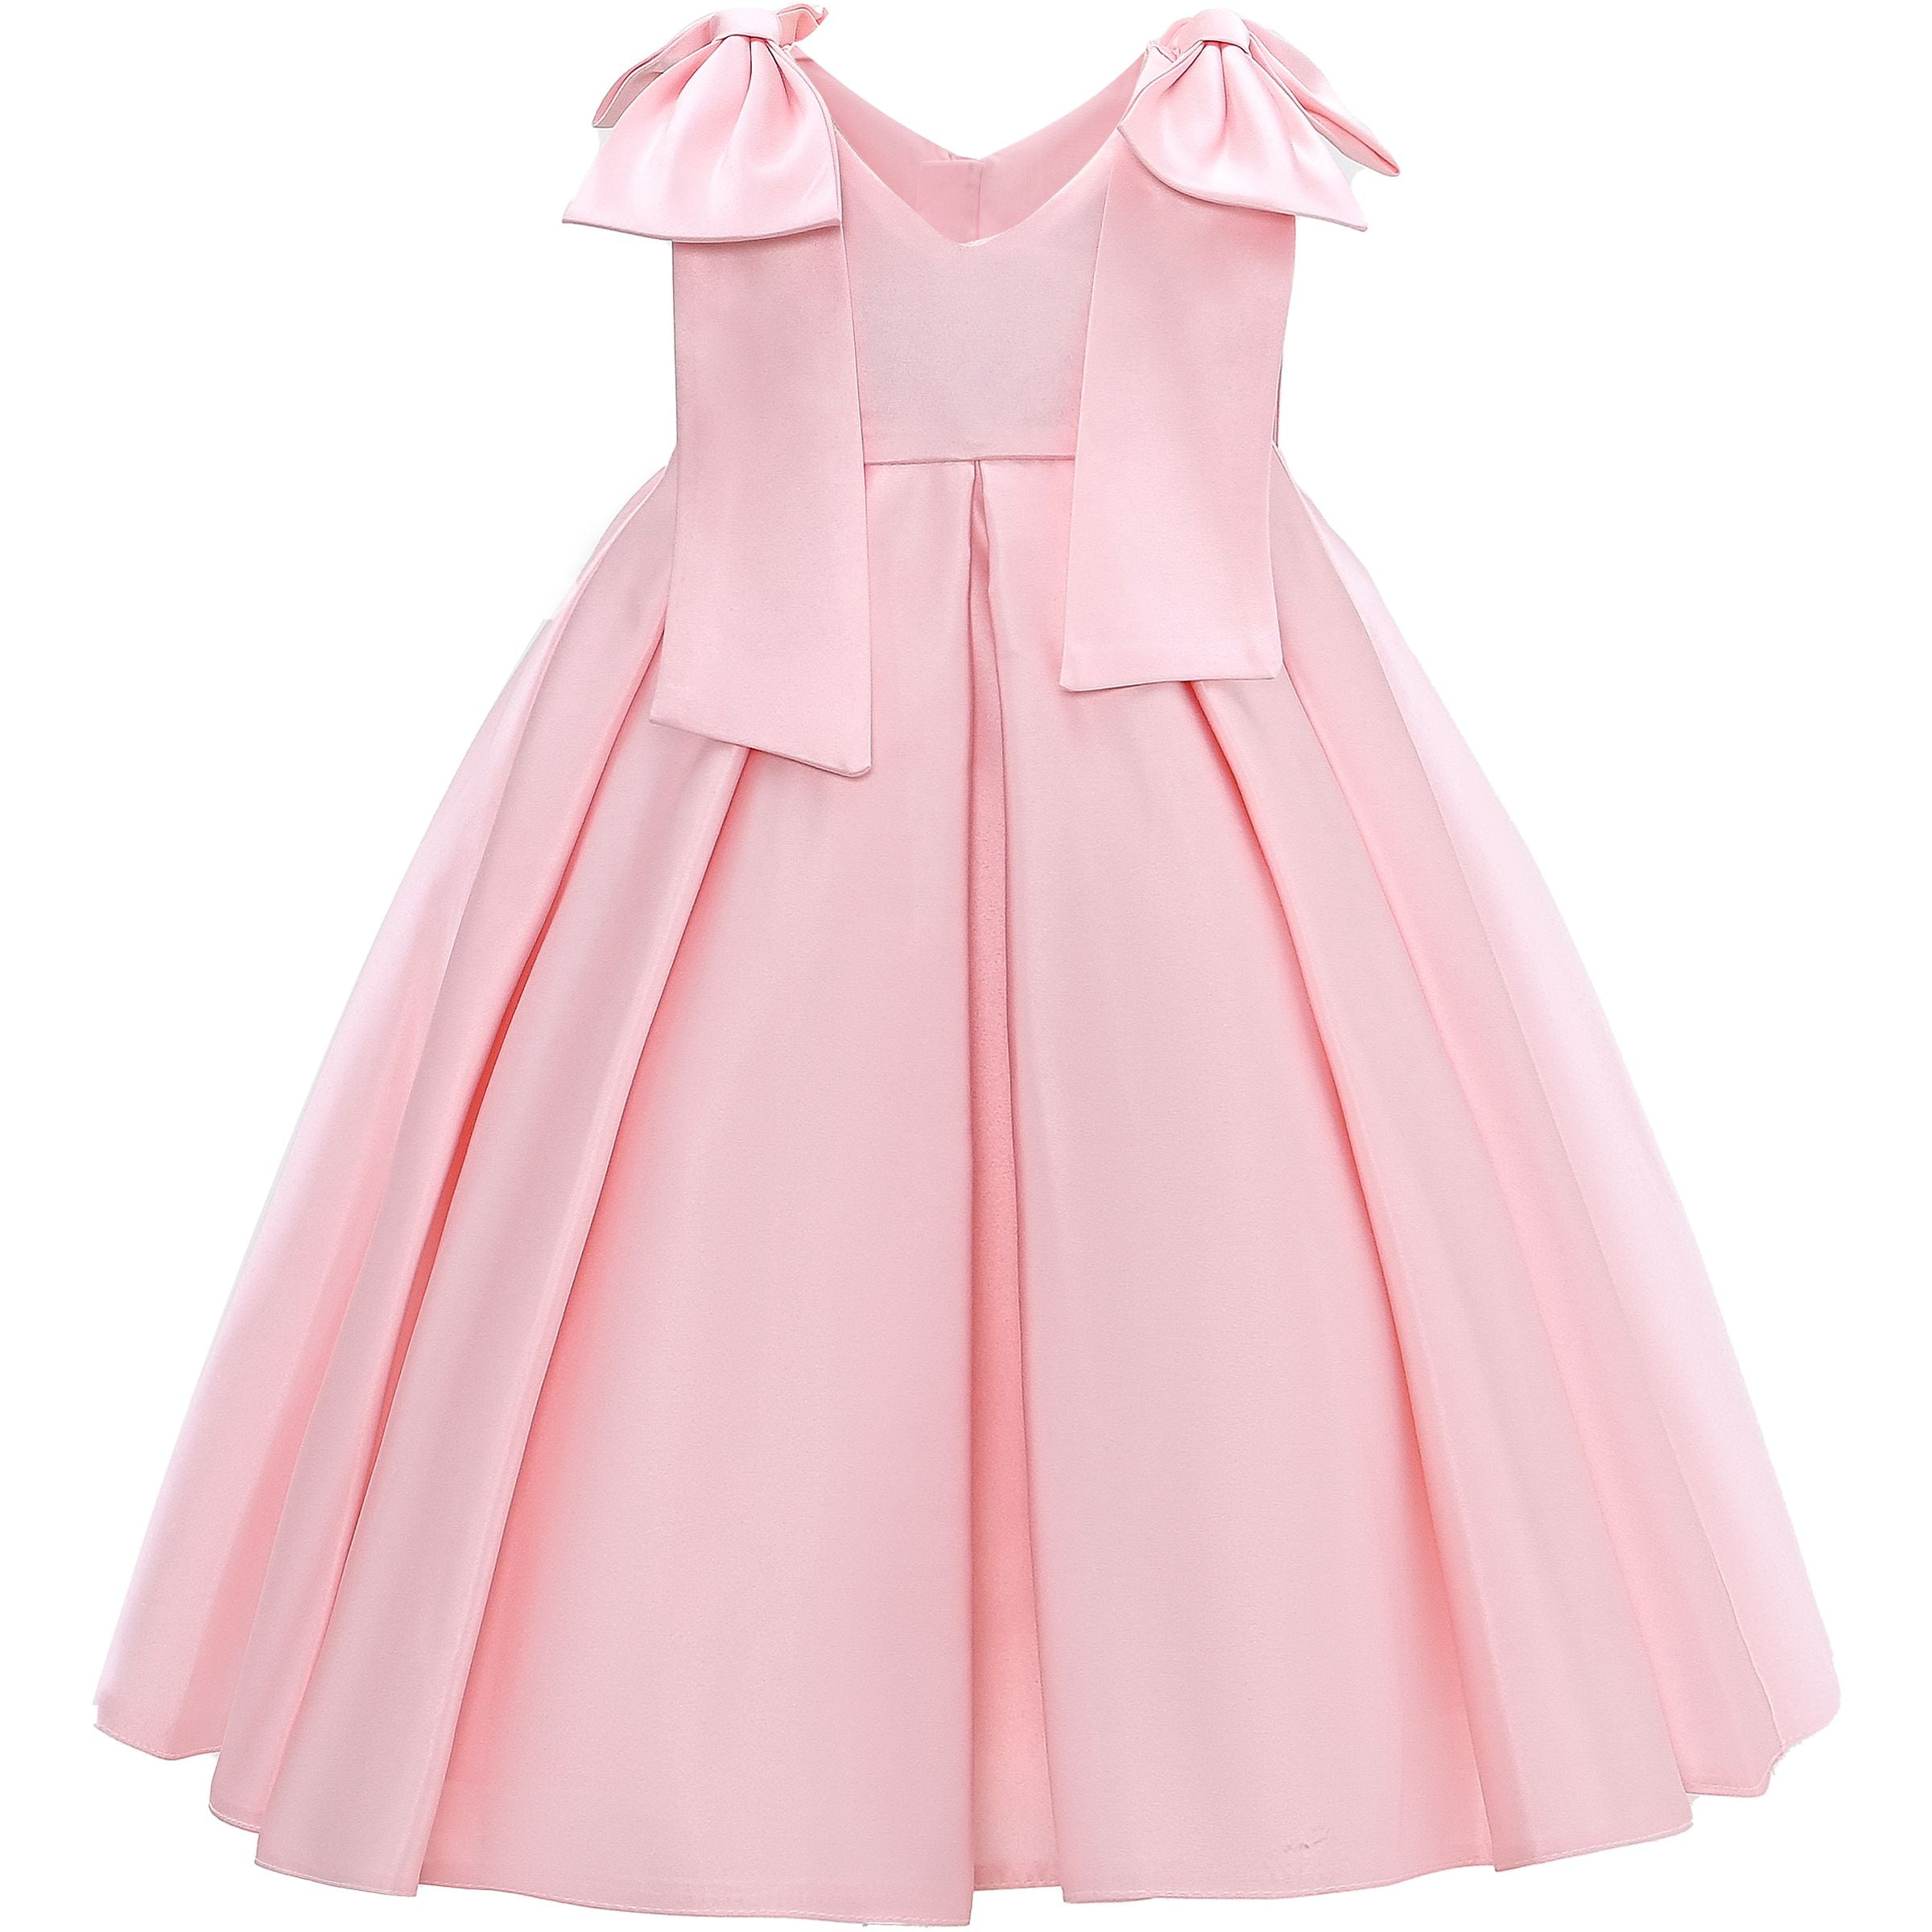 Old Rose Pink Tulle Dress - kids atelier